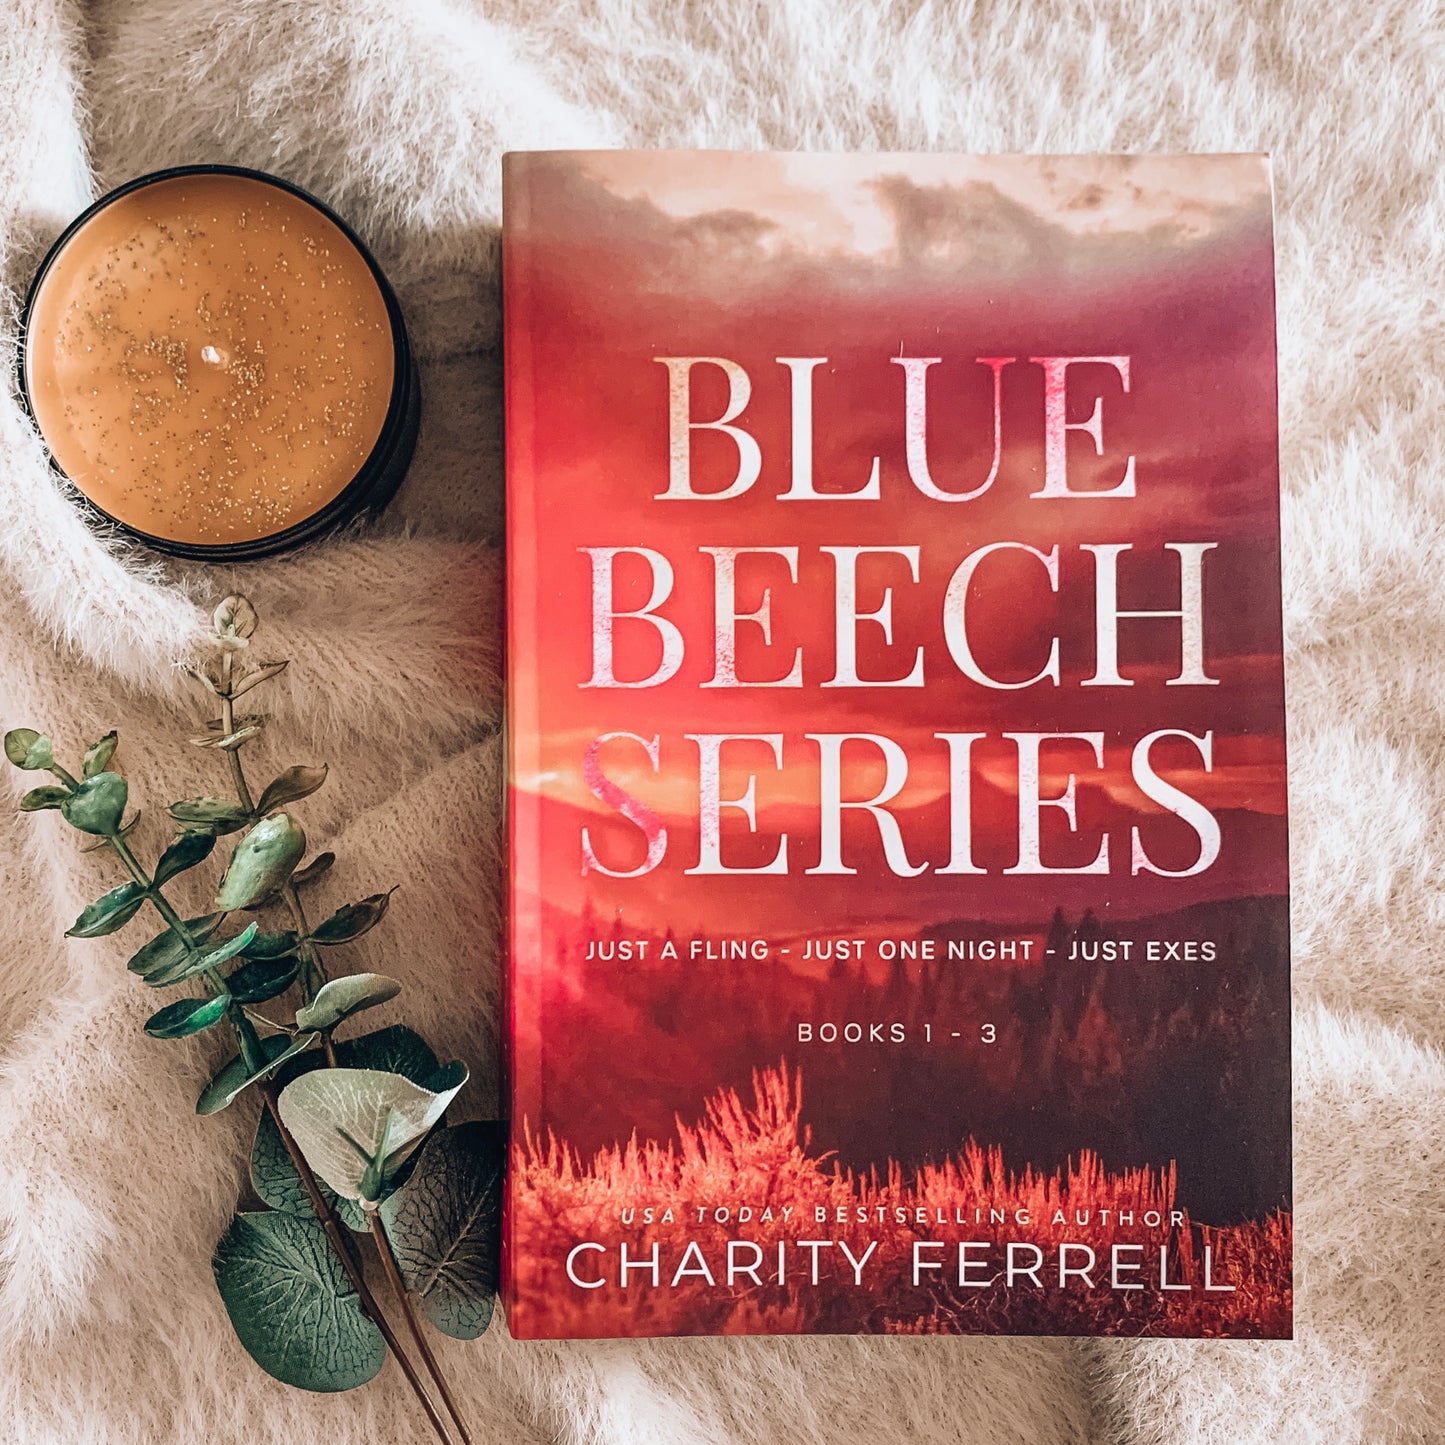 Blue Beech Series by Charity Ferrell